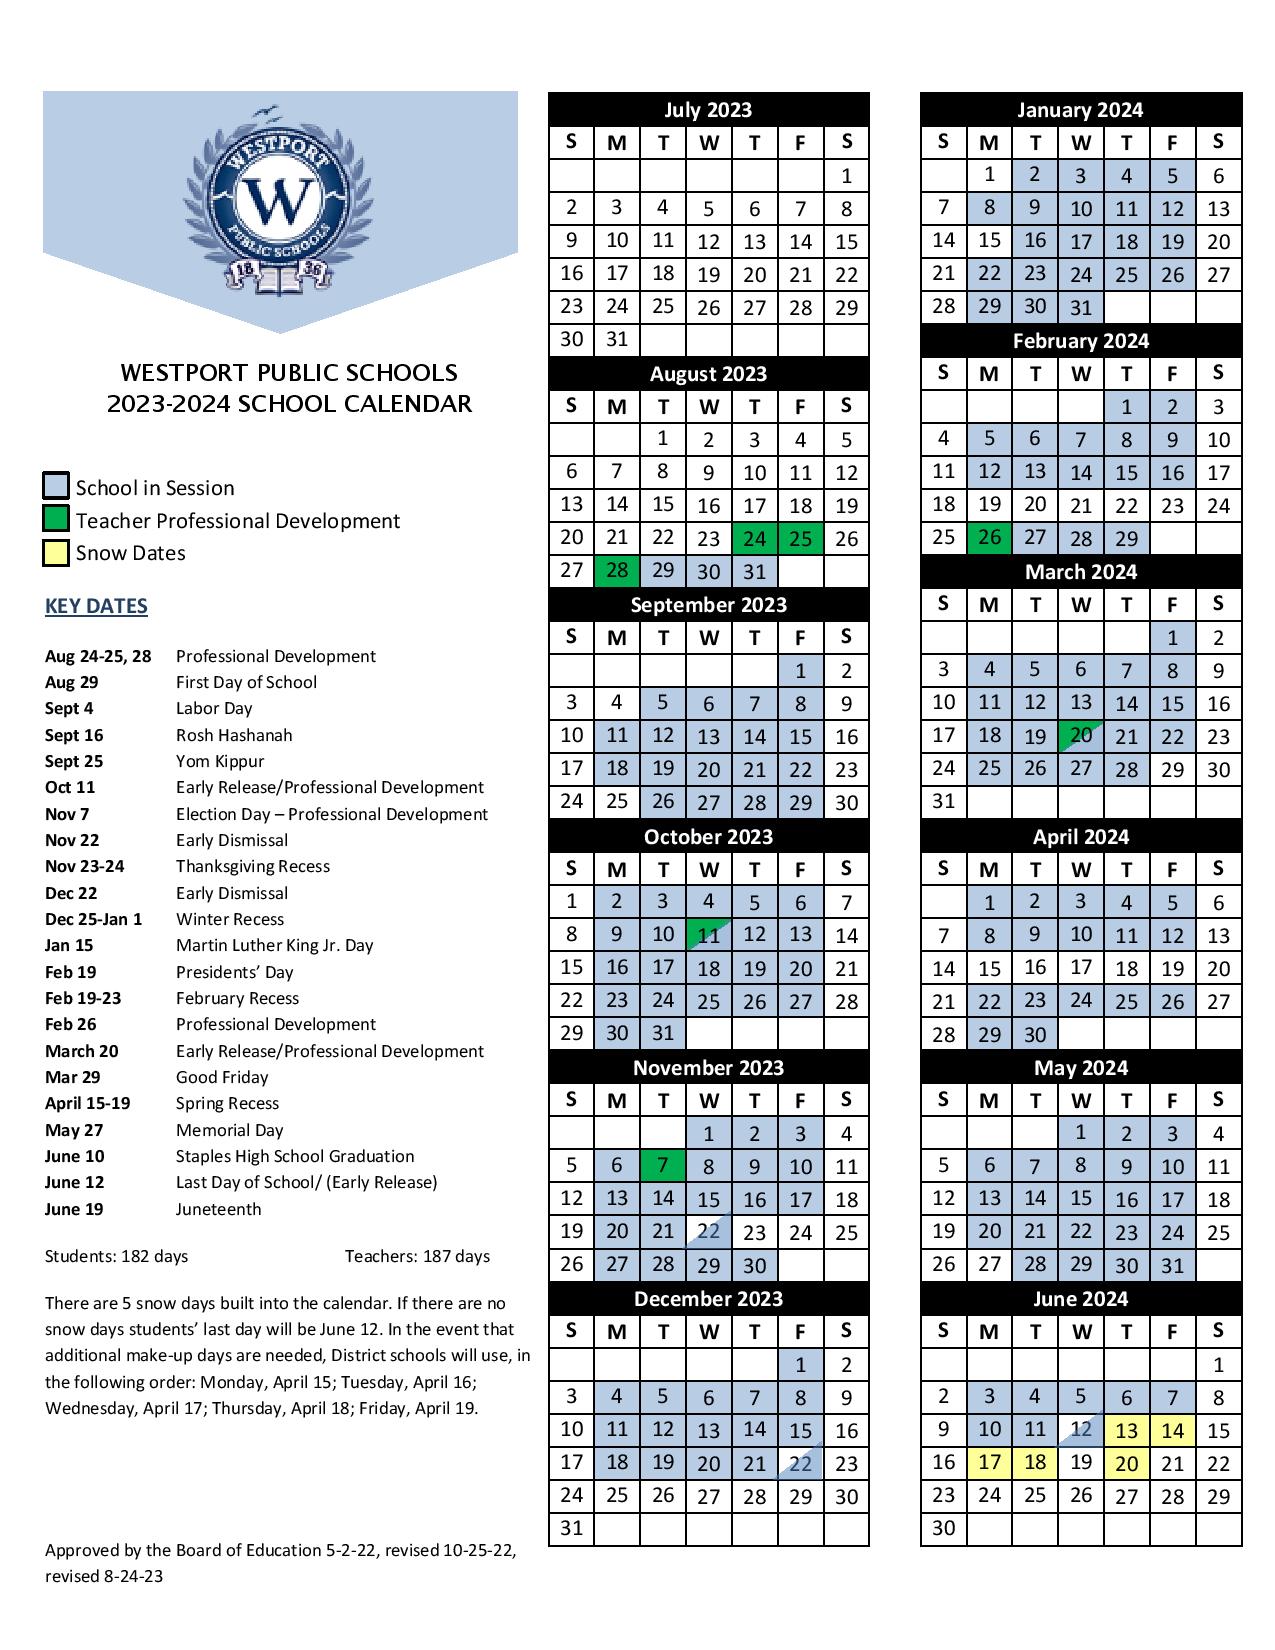 Westport Public Schools Calendar 20232024 in PDF